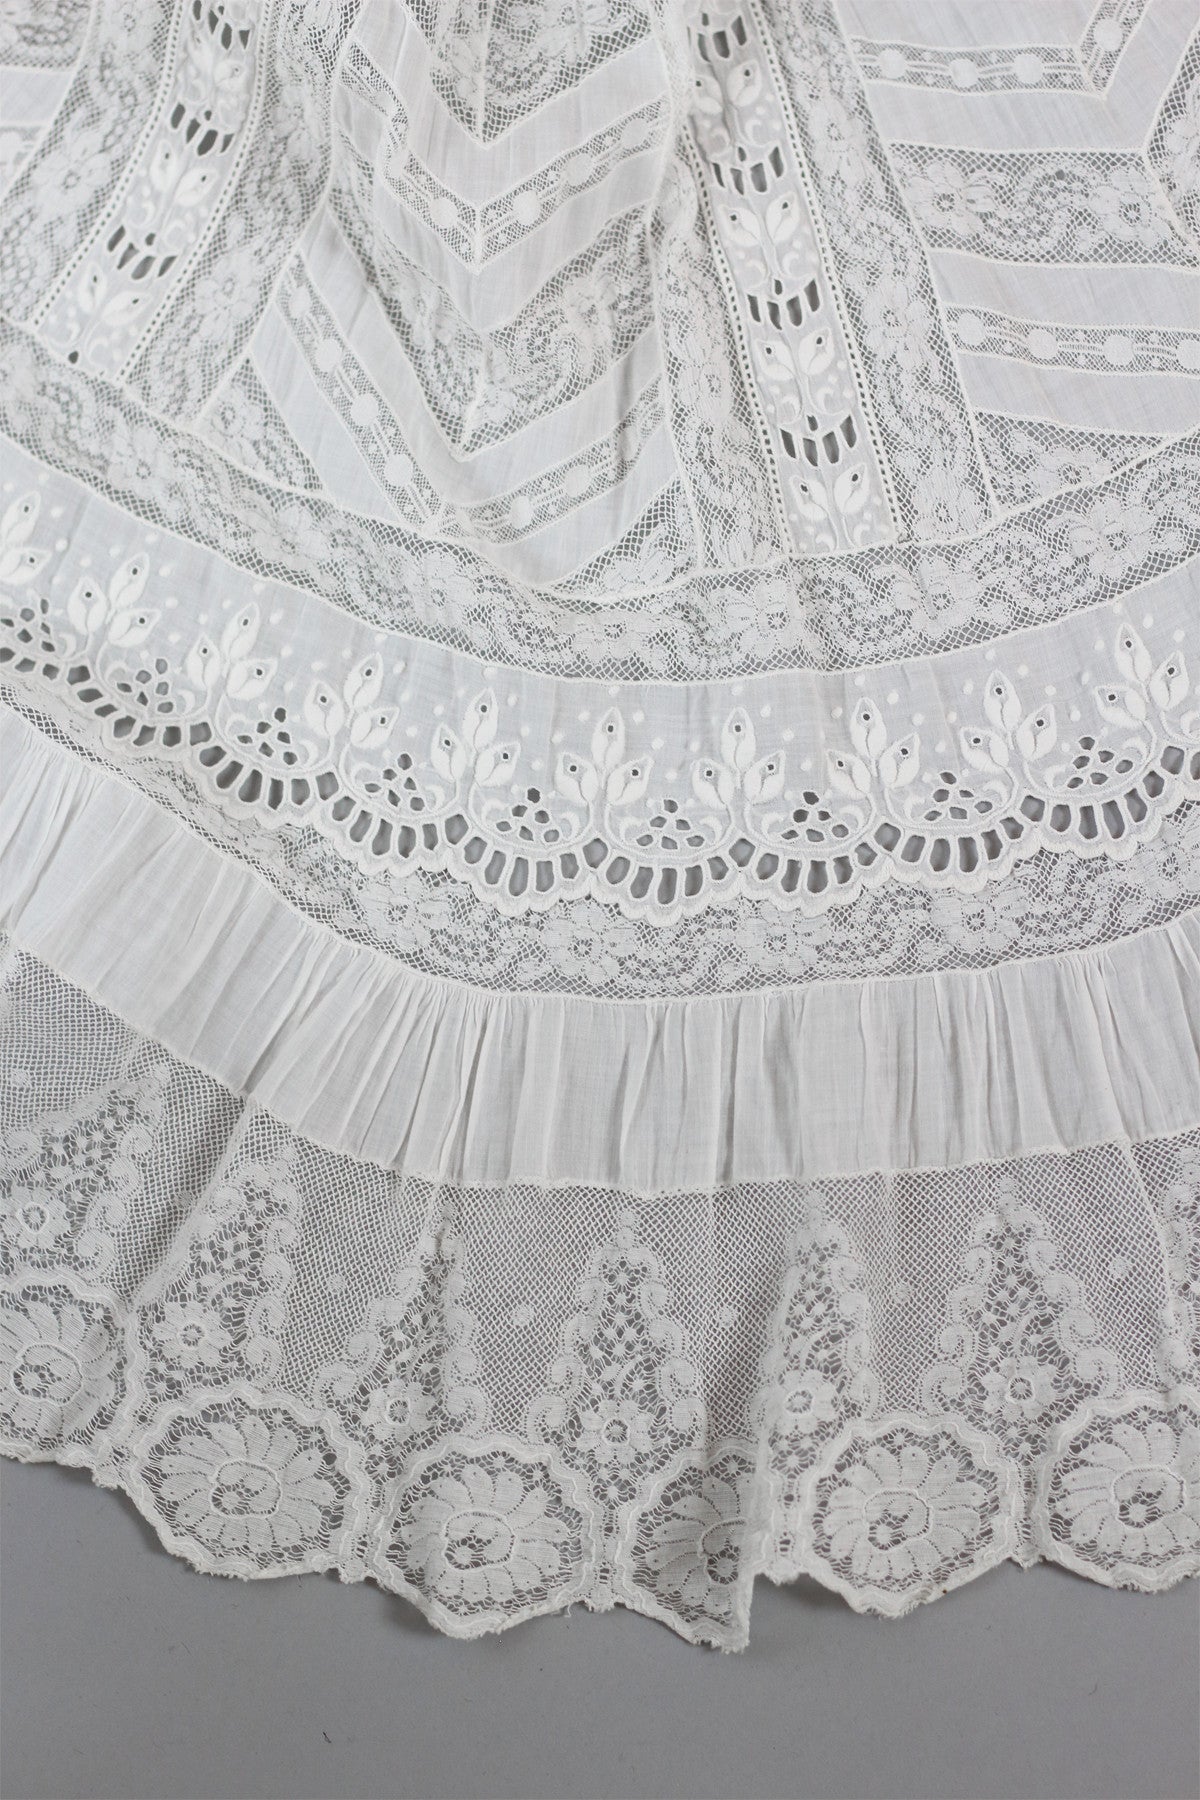 Lace Dreams Edwardian Wedding Dress